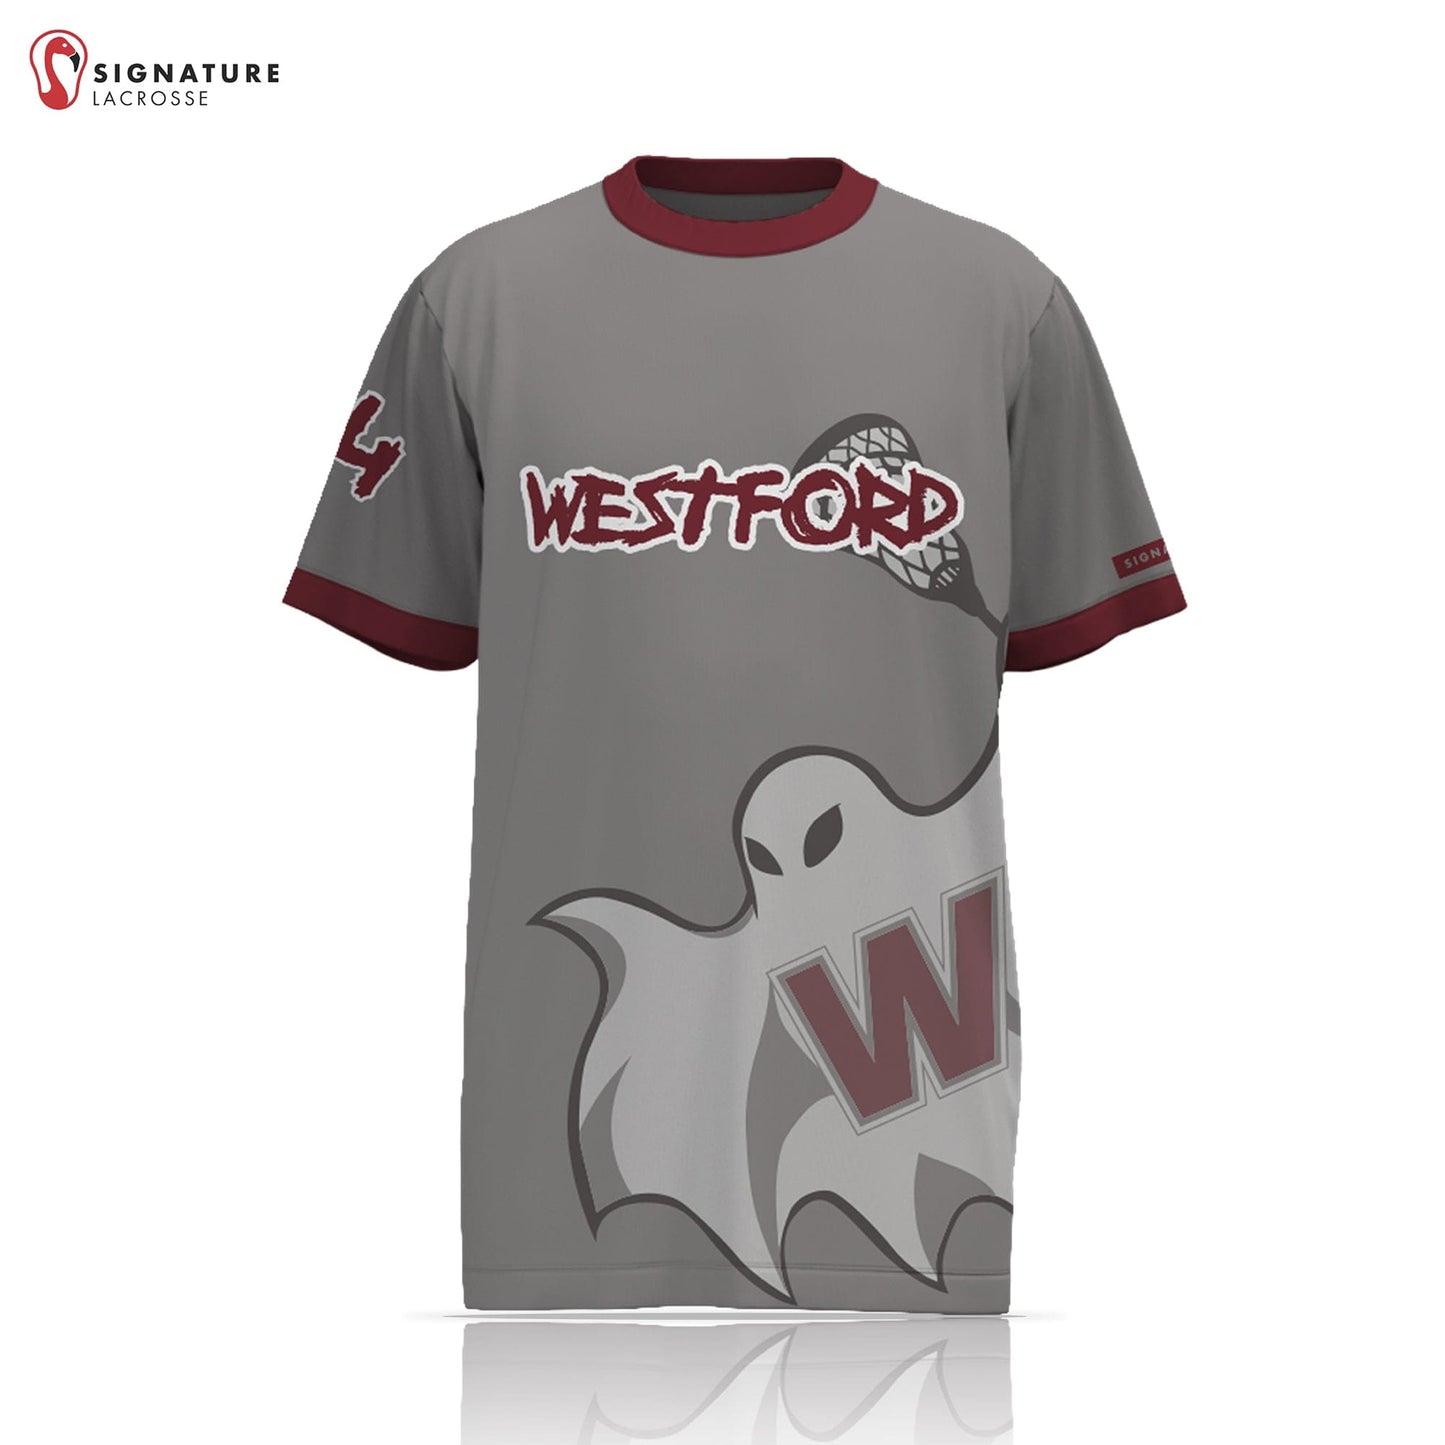 Westford Youth Lacrosse Player Short Sleeve Shooting Shirt Signature Lacrosse